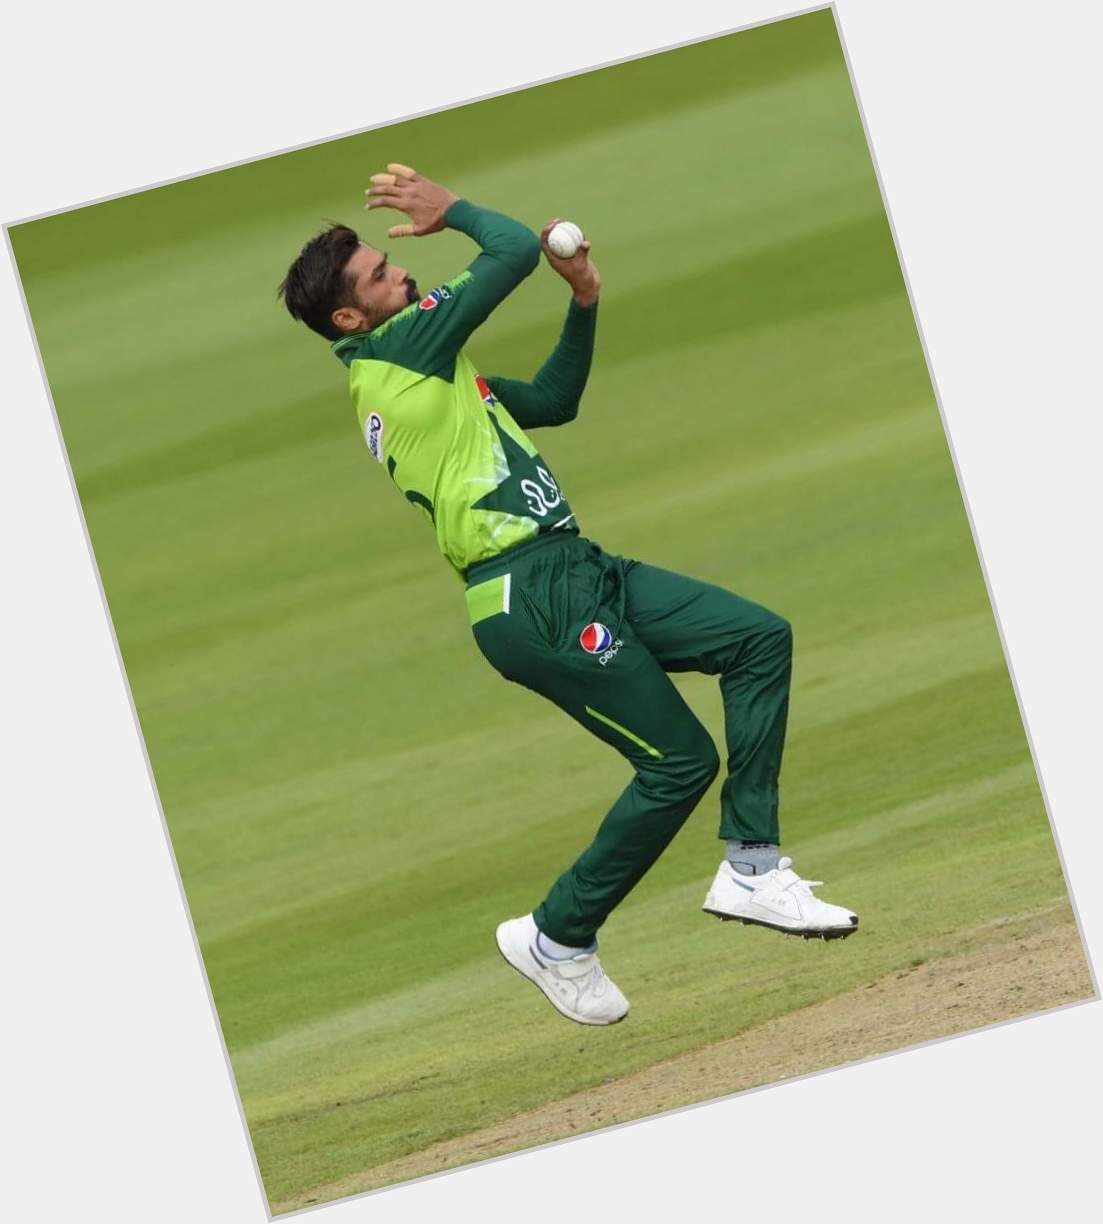 259 international wickets winner winner 

Happy birthday Mohammad Amir!   